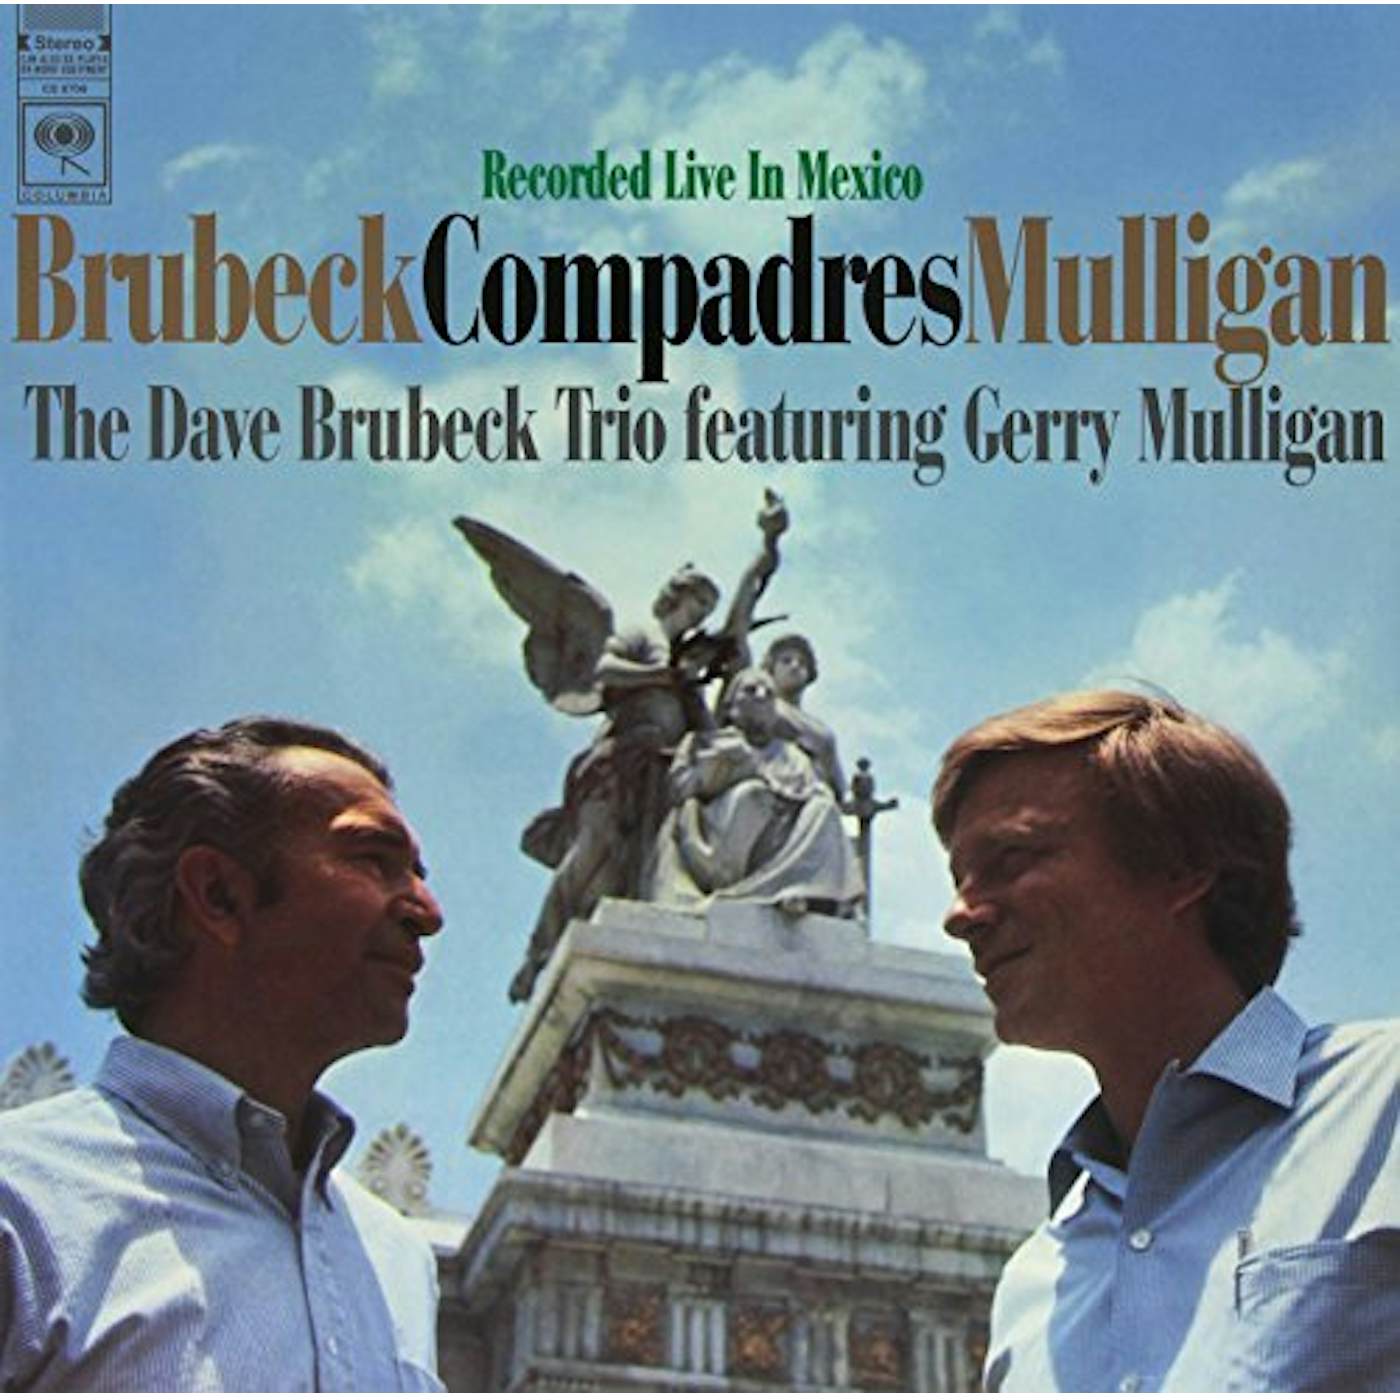 Dave Brubeck / Gerry Mulligan Compadres Vinyl Record